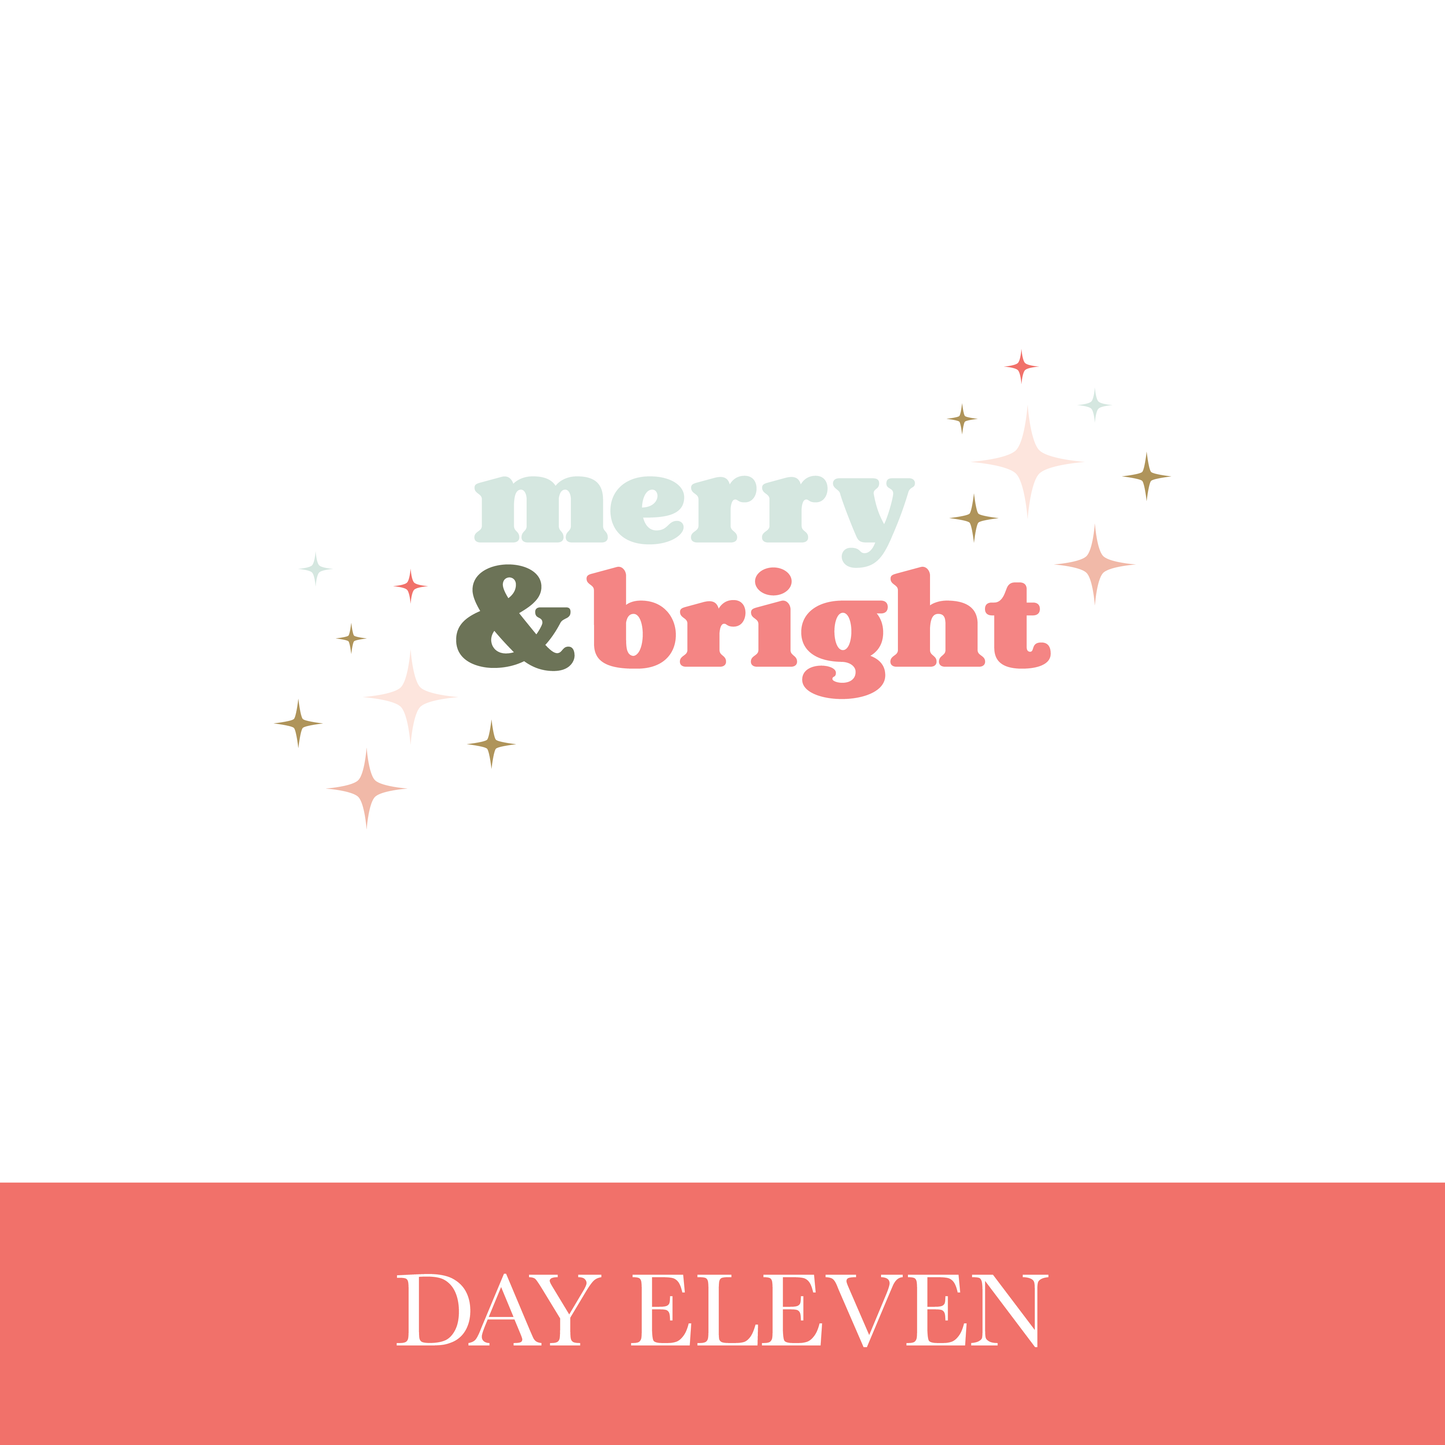 fj 12 days of Christmas printables - DAY ELEVEN